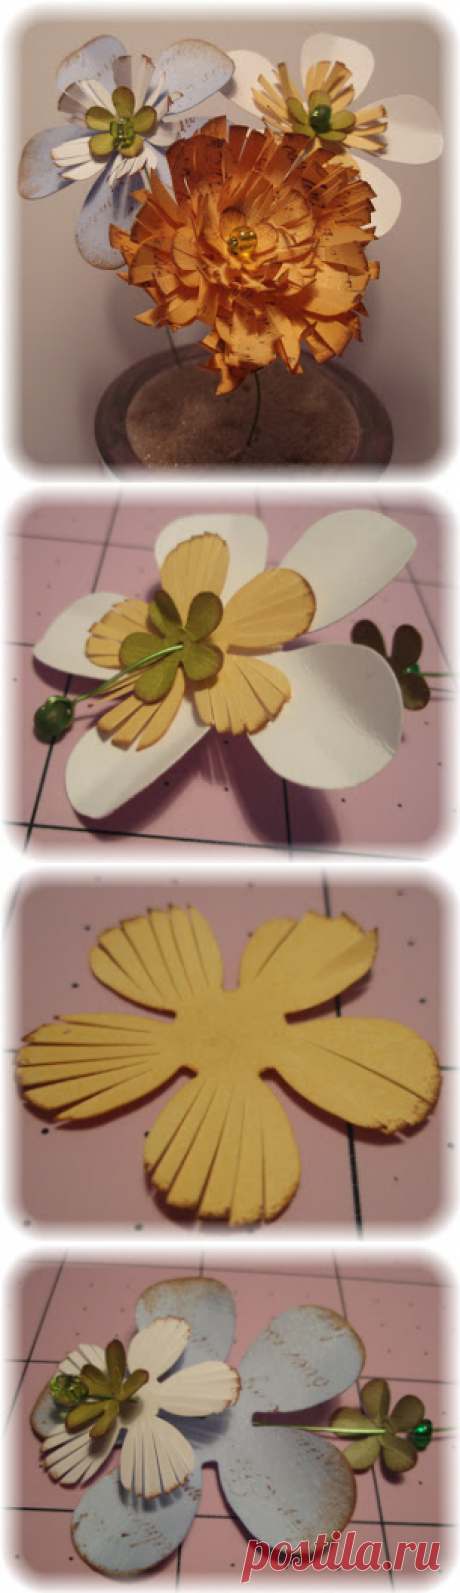 StampARTic: Möt våren med Ann-Louices vackra blommor!